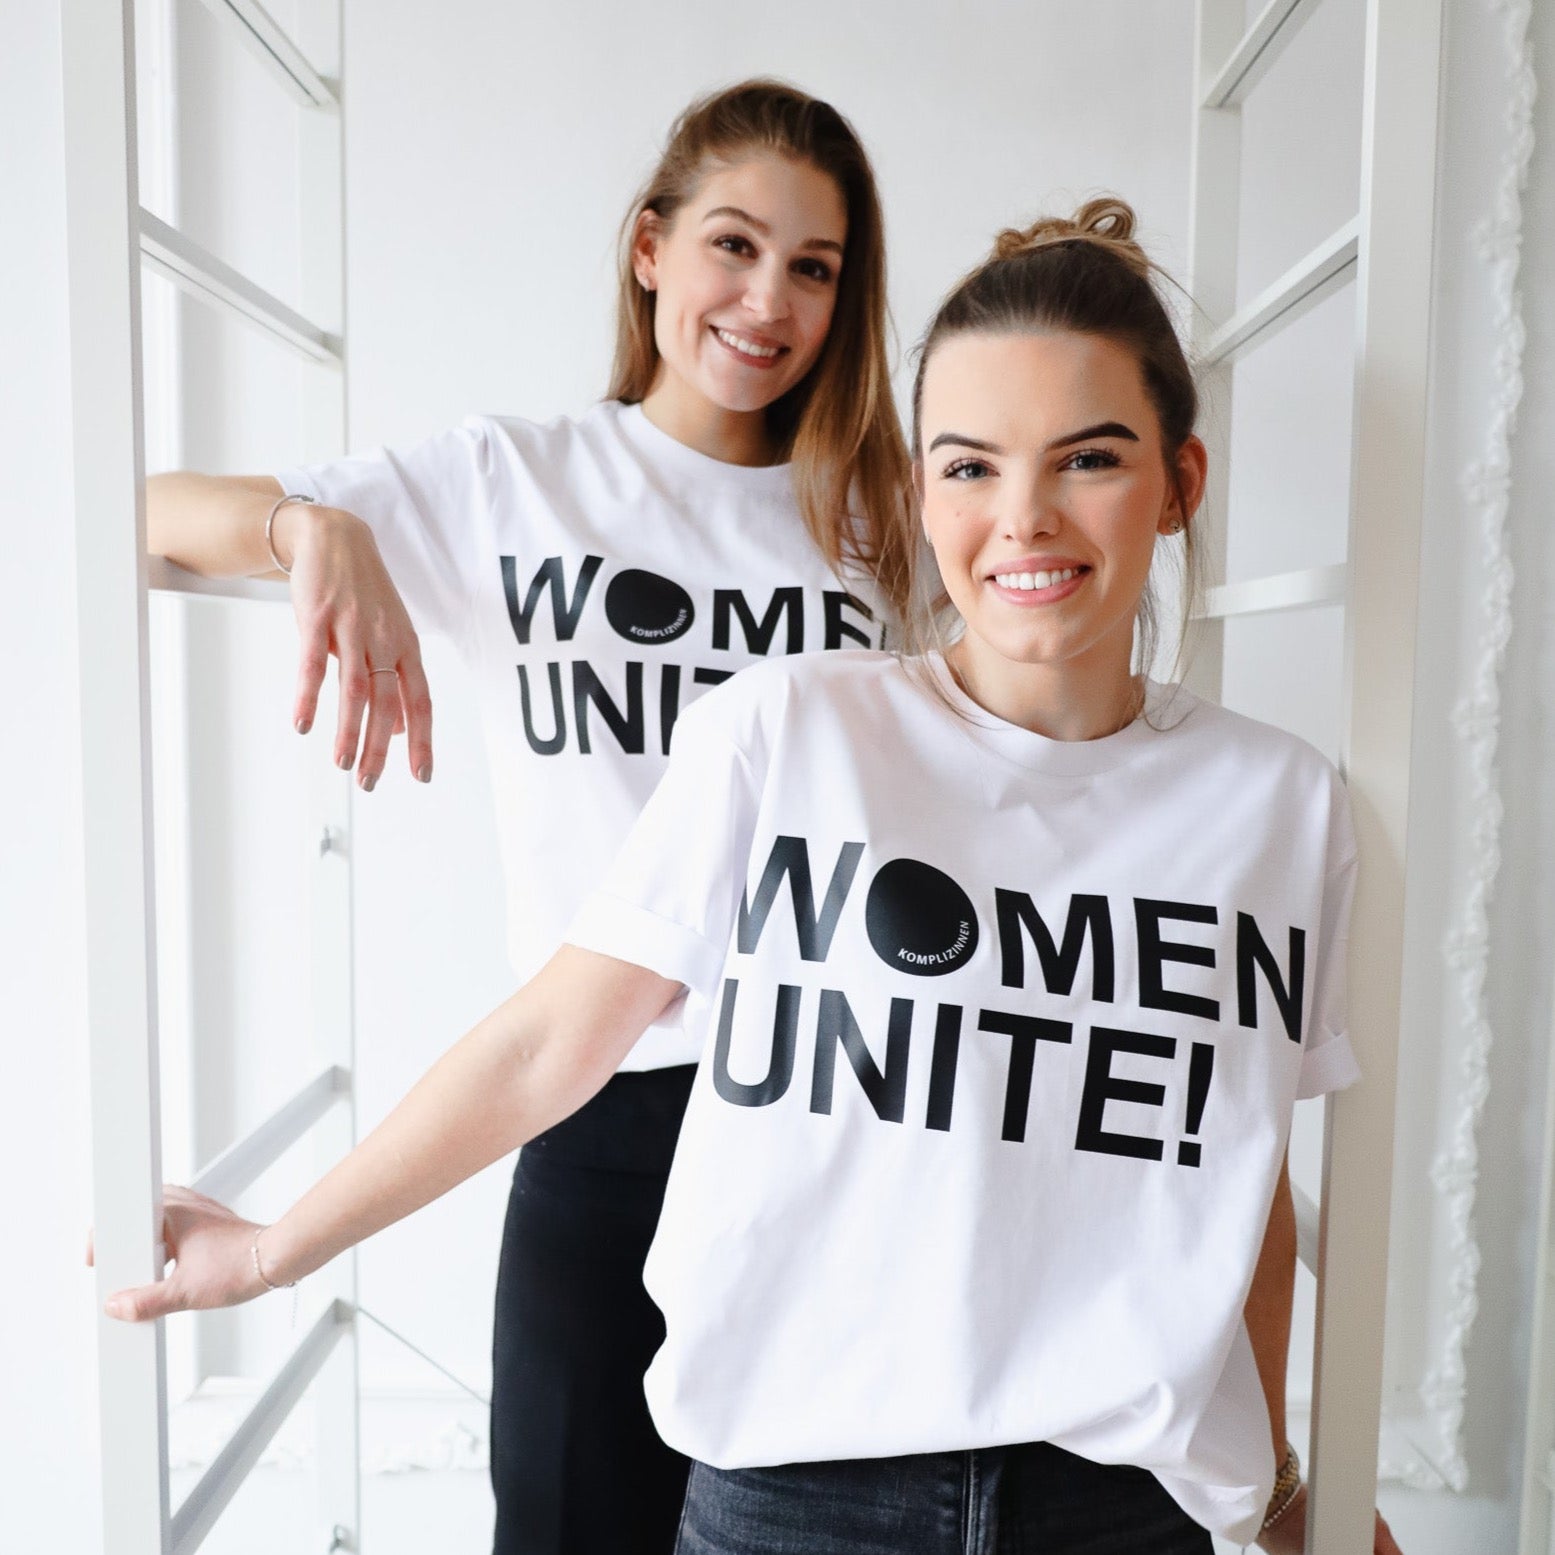 WOMEN UNITE! Shirt